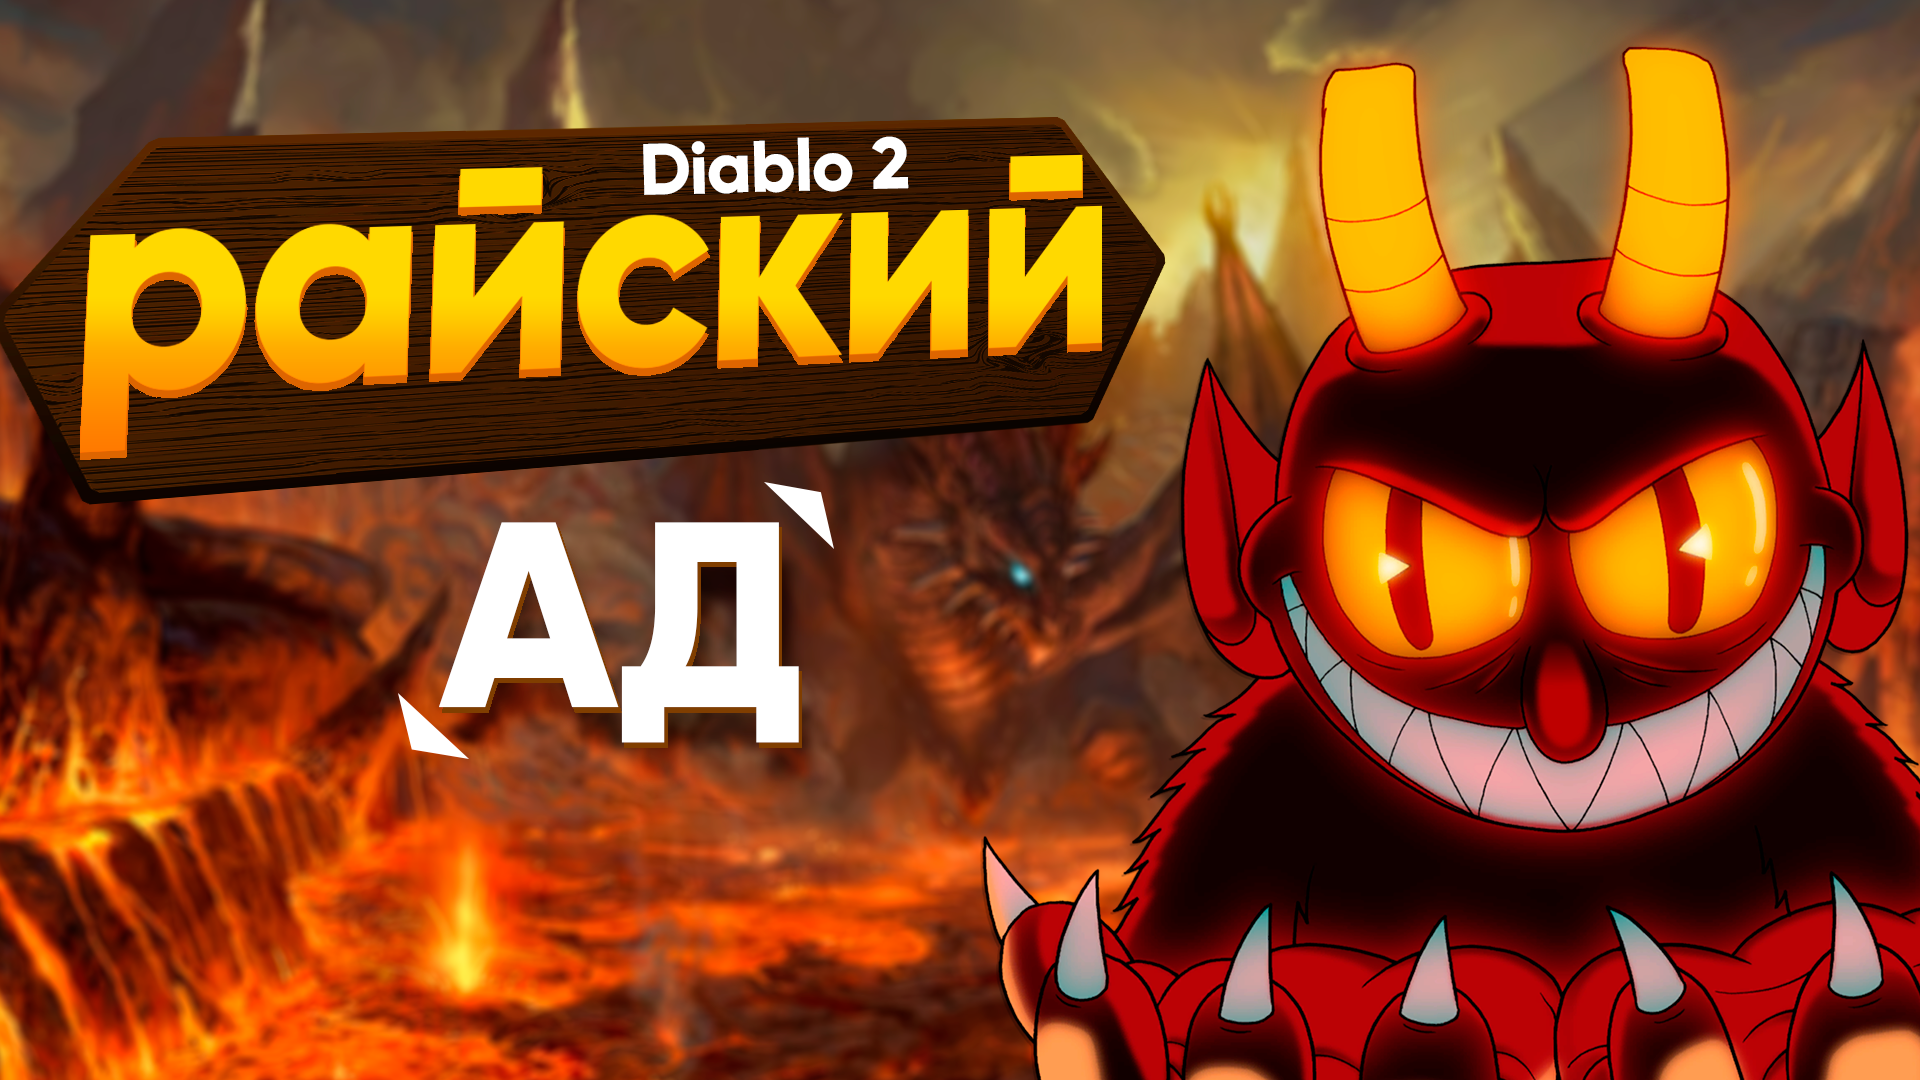 РАЙСКИЙ АД - Diablo 2 #3